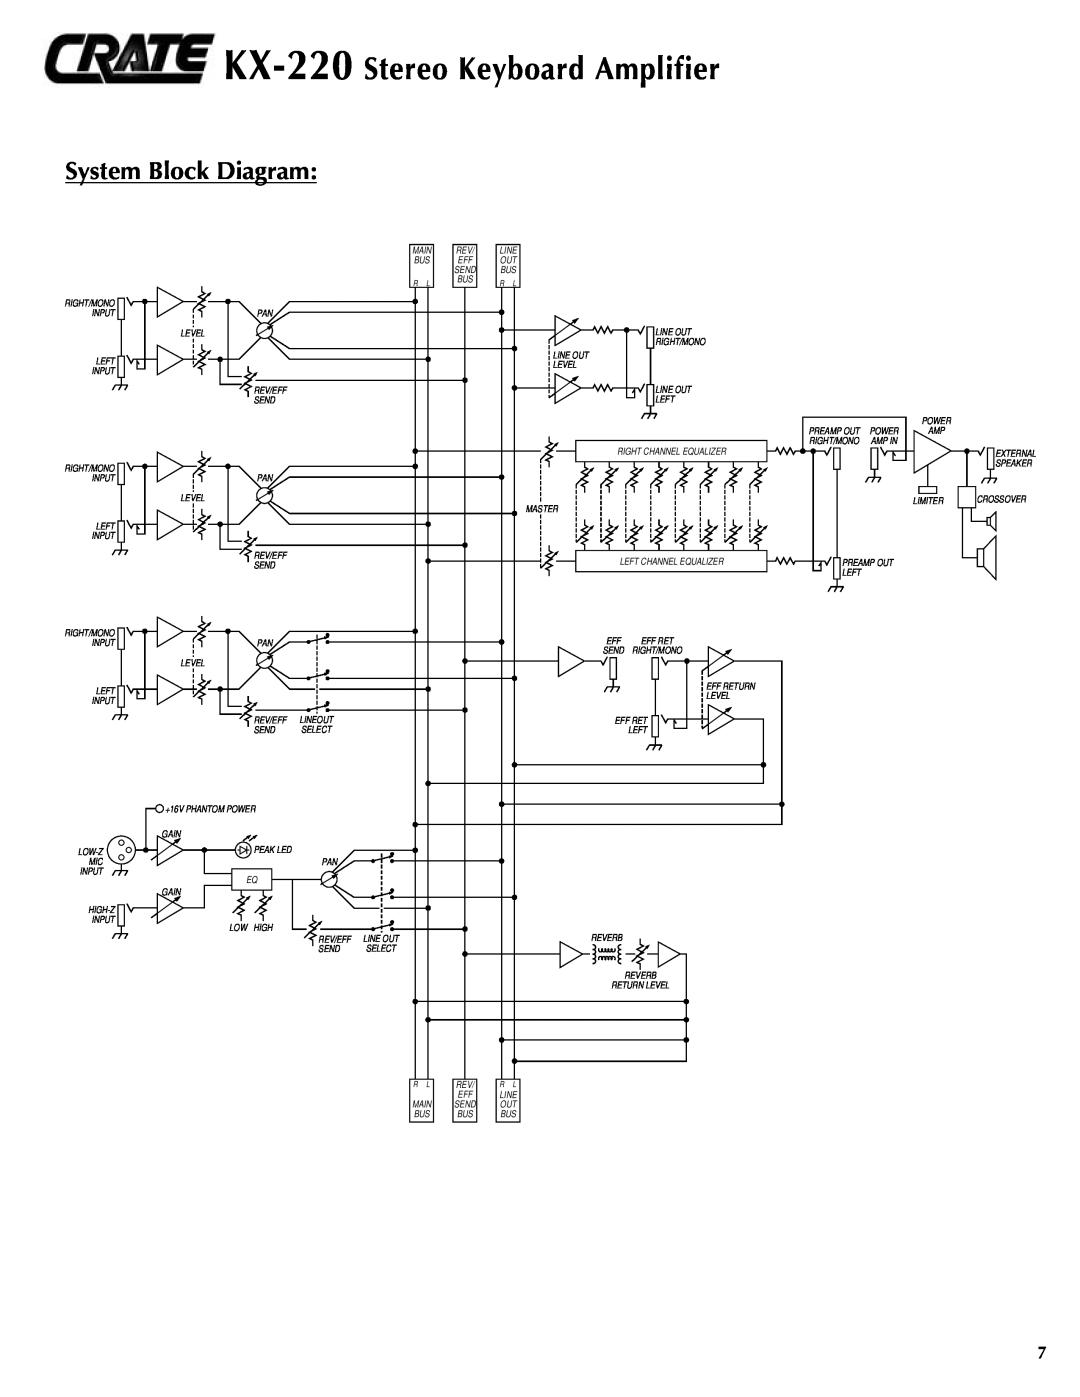 Crate Amplifiers manual System Block Diagram, KX-220 Stereo Keyboard Amplifier 